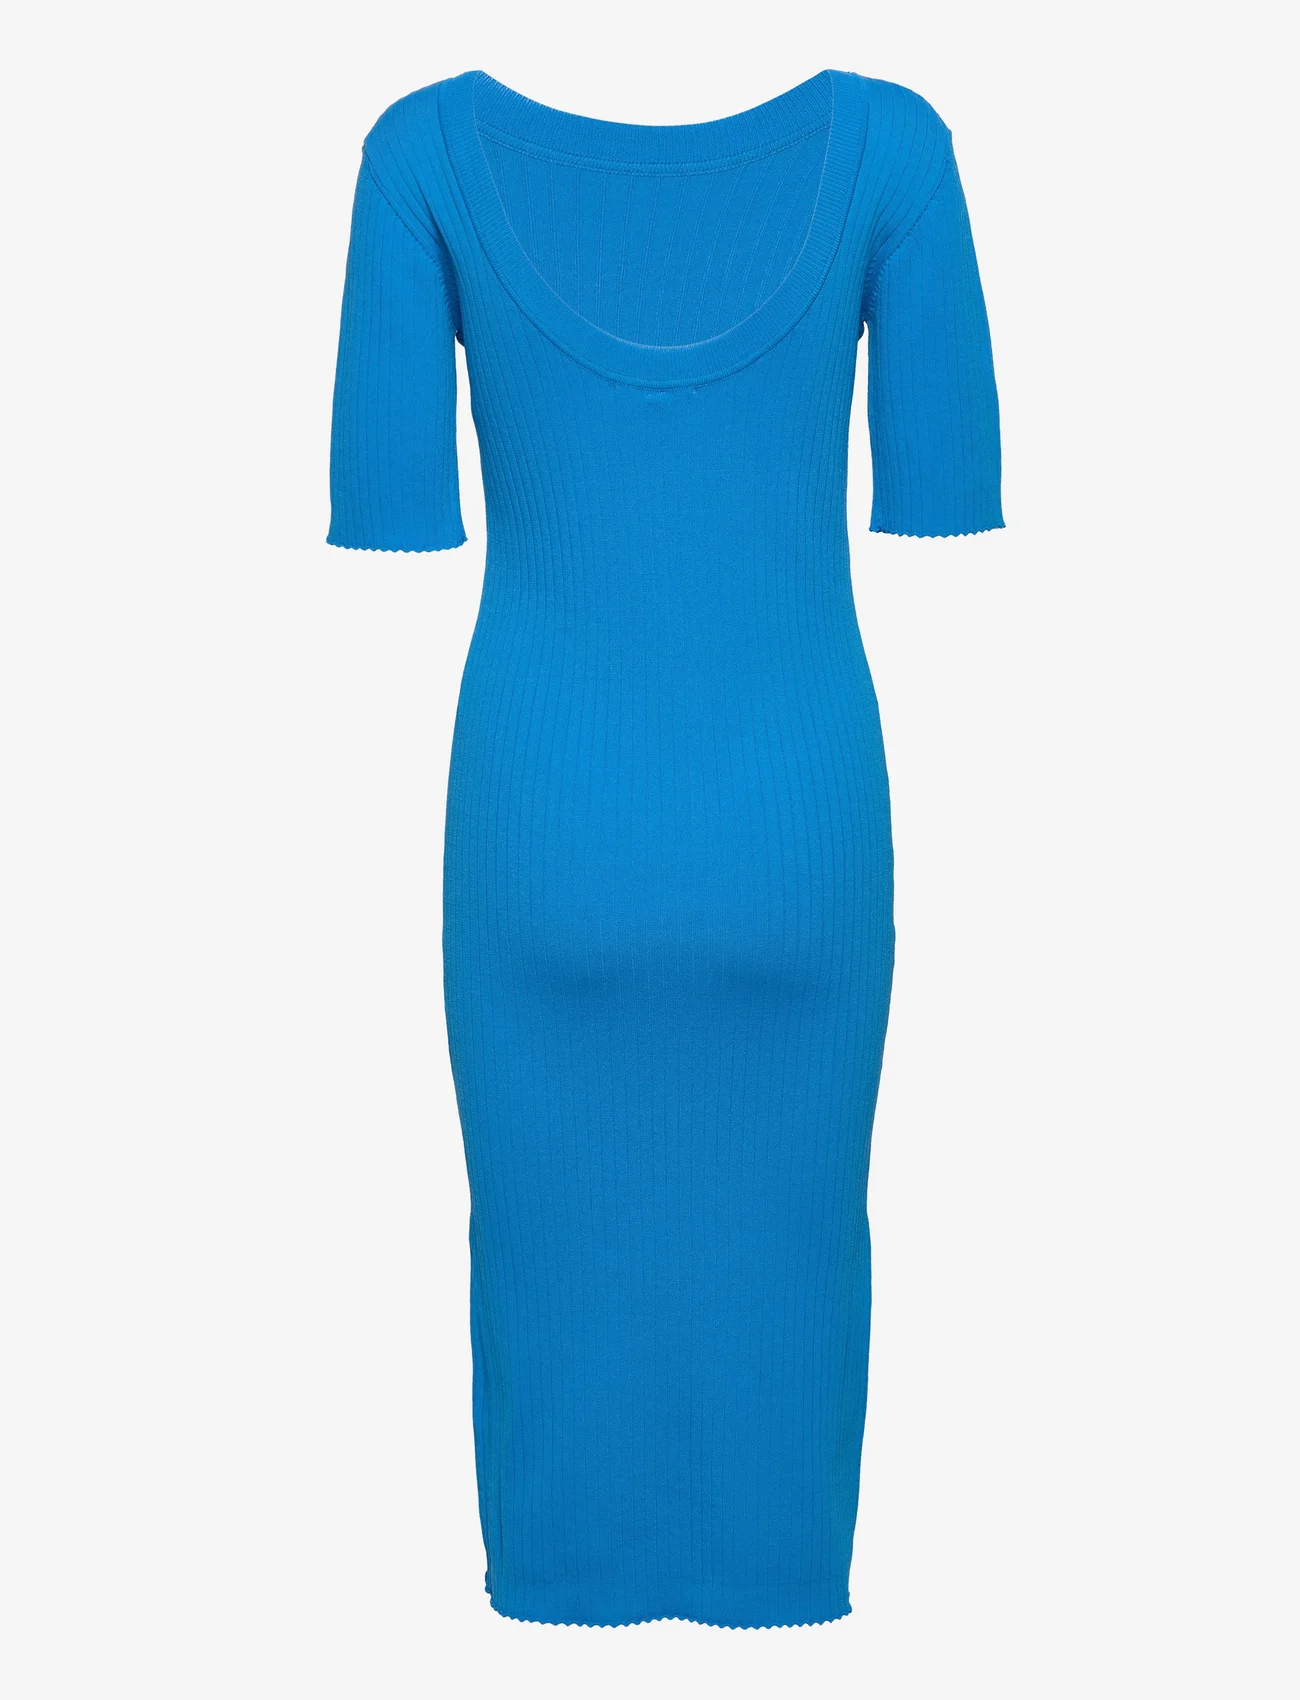 Just Female - Fresh dress - kotelomekot - malibu blue - 1